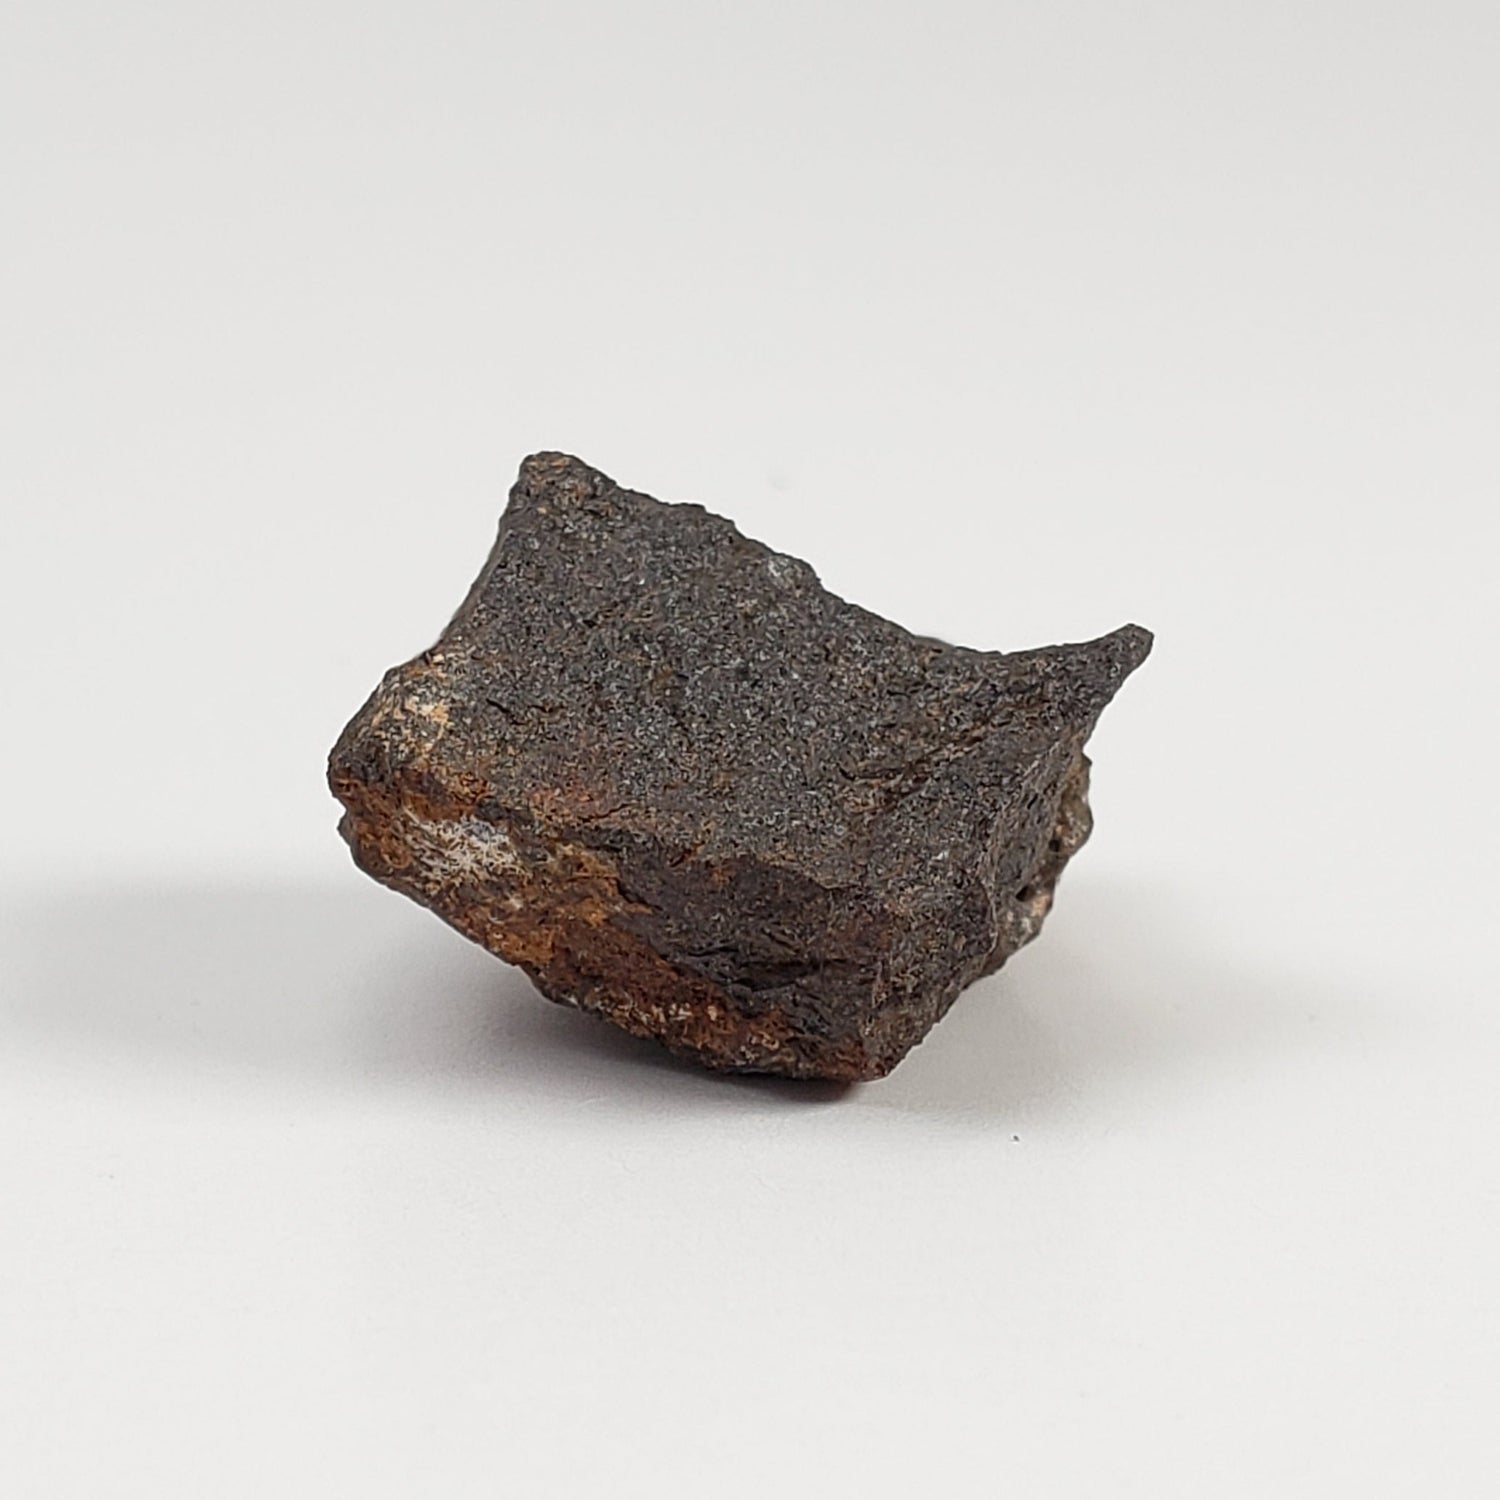 Columbus Meteorite | 4.57 Grams | Individual | Low TKW H5 Chondrite | Luna County, New Mexico, USA